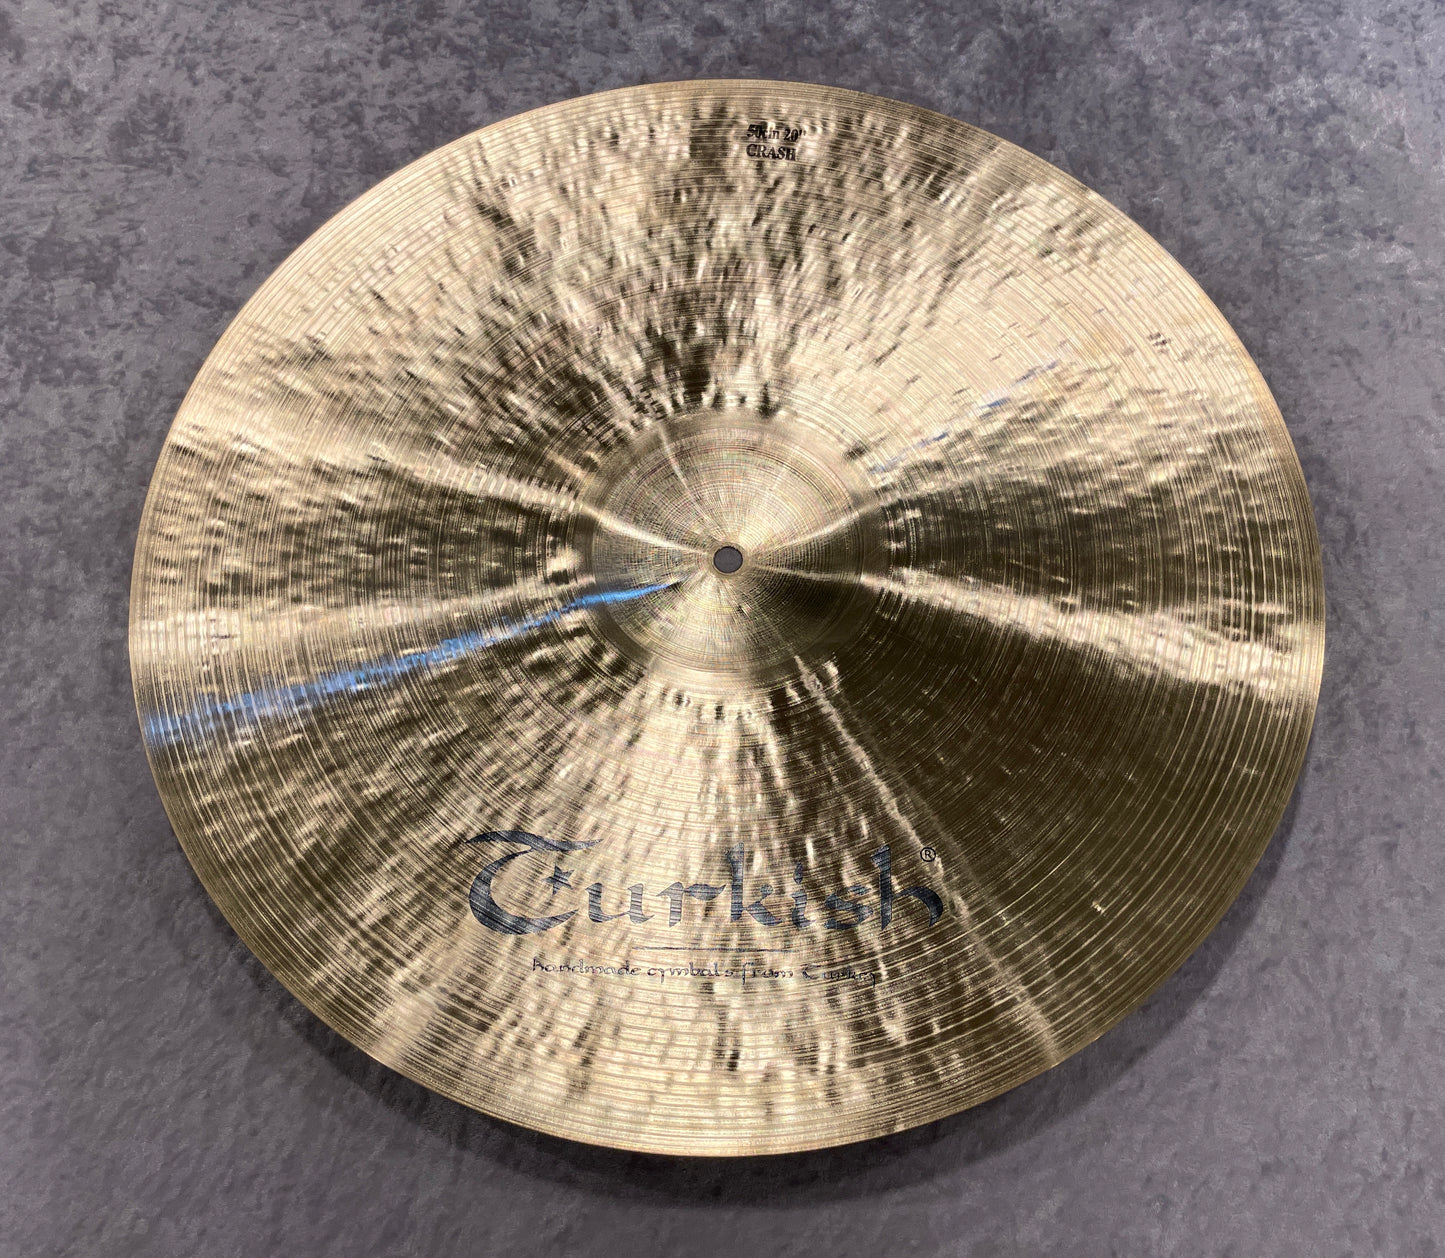 20" Turkish Cymbals Classic Series Crash Cymbal 1762g *Sound File*